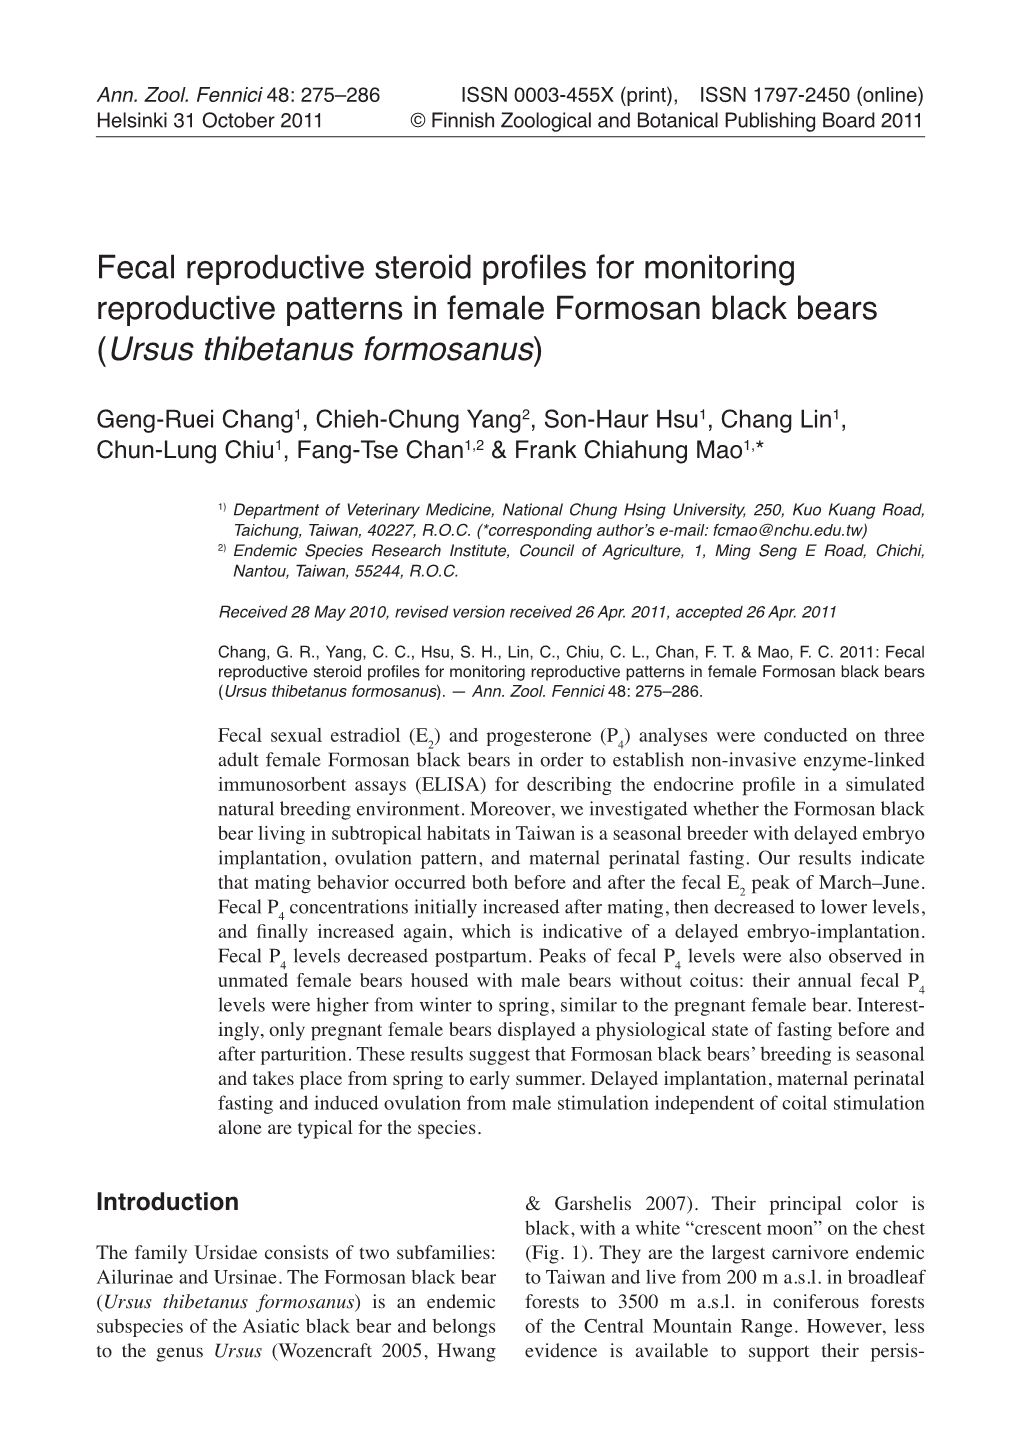 Fecal Reproductive Steroid Profiles for Monitoring Reproductive Patterns in Female Formosan Black Bears (Ursus Thibetanus Formosanus)